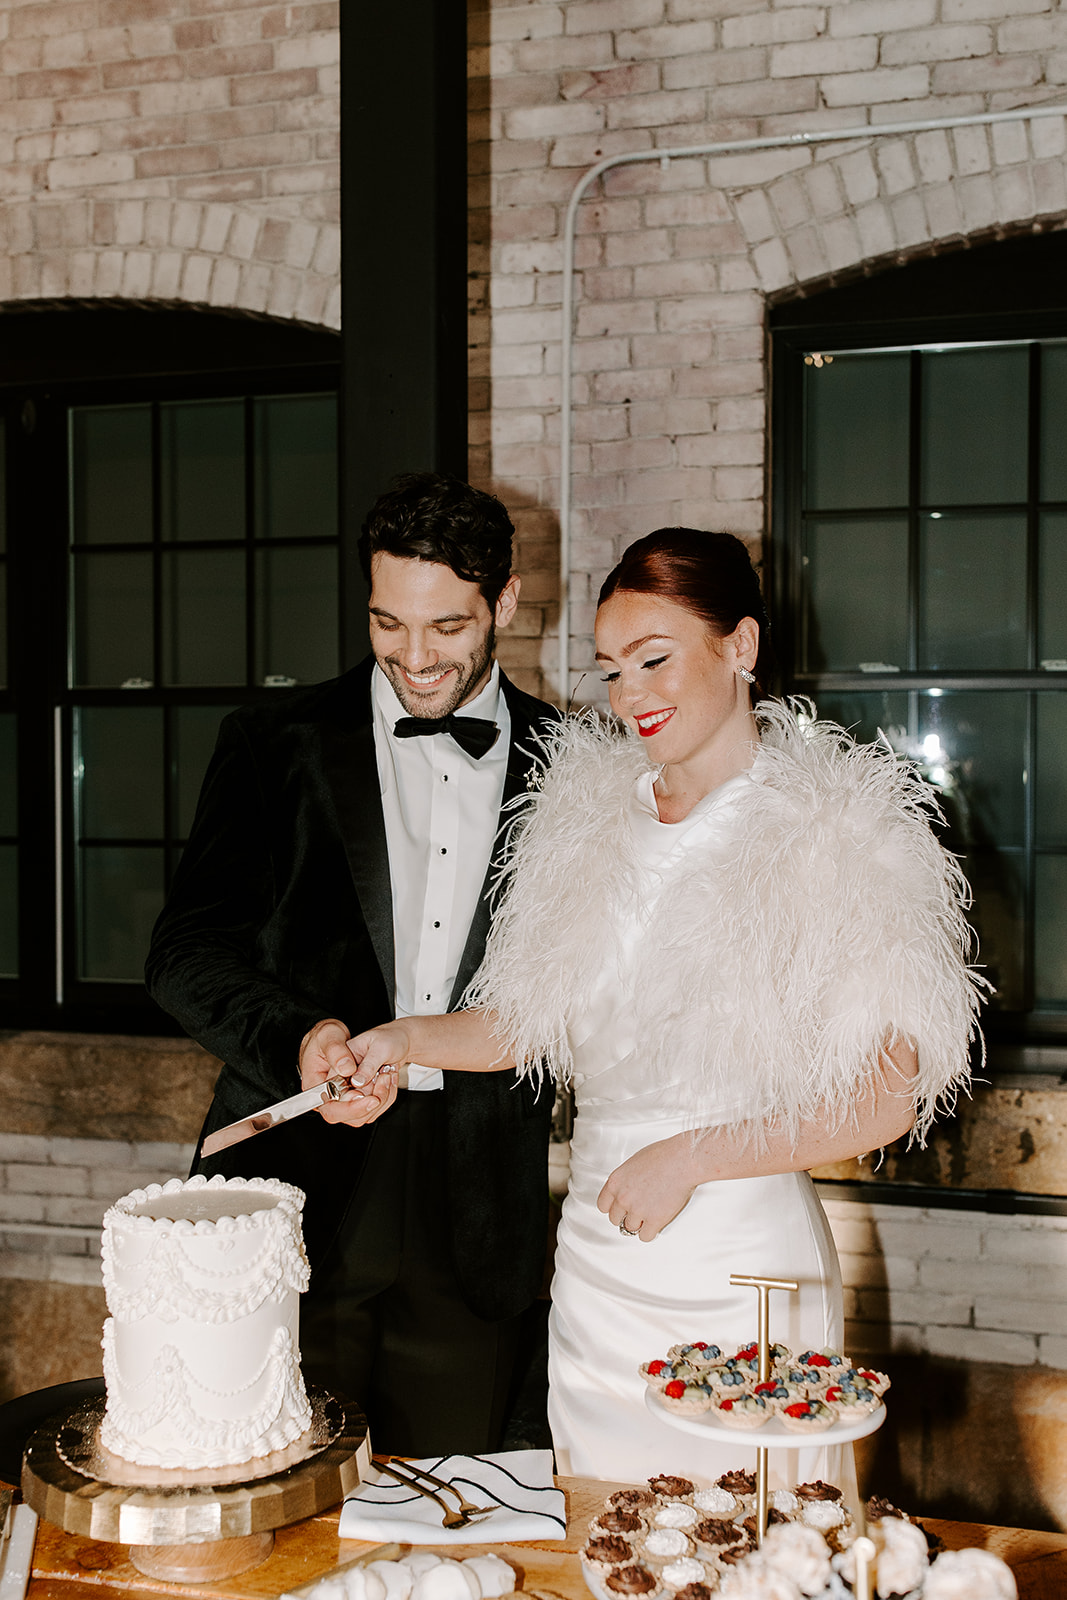 beautiful bride and groom cut their 2 tier wedding cake